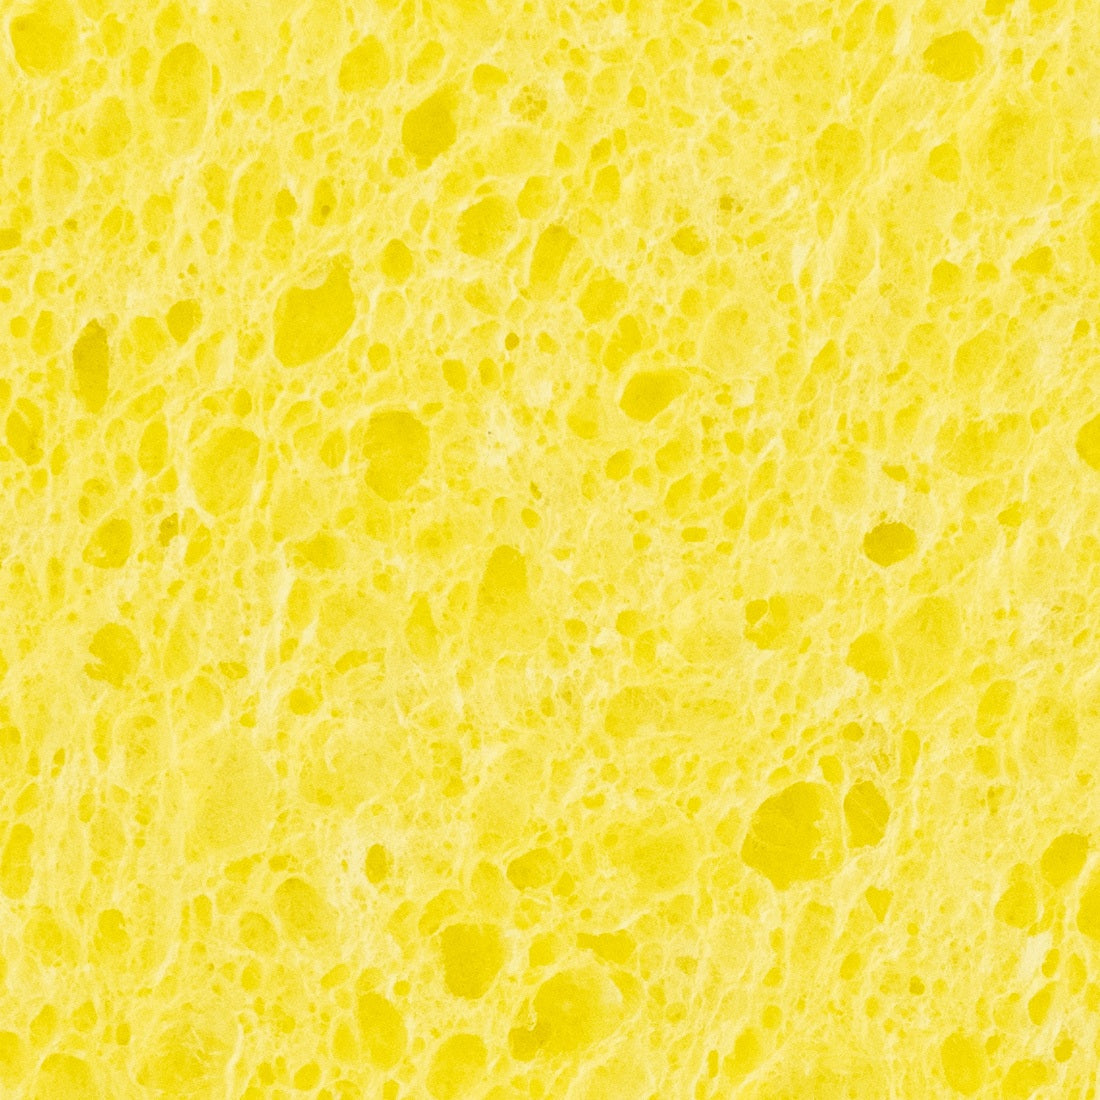 World Enterprises Cellulose Sponge Zoom View